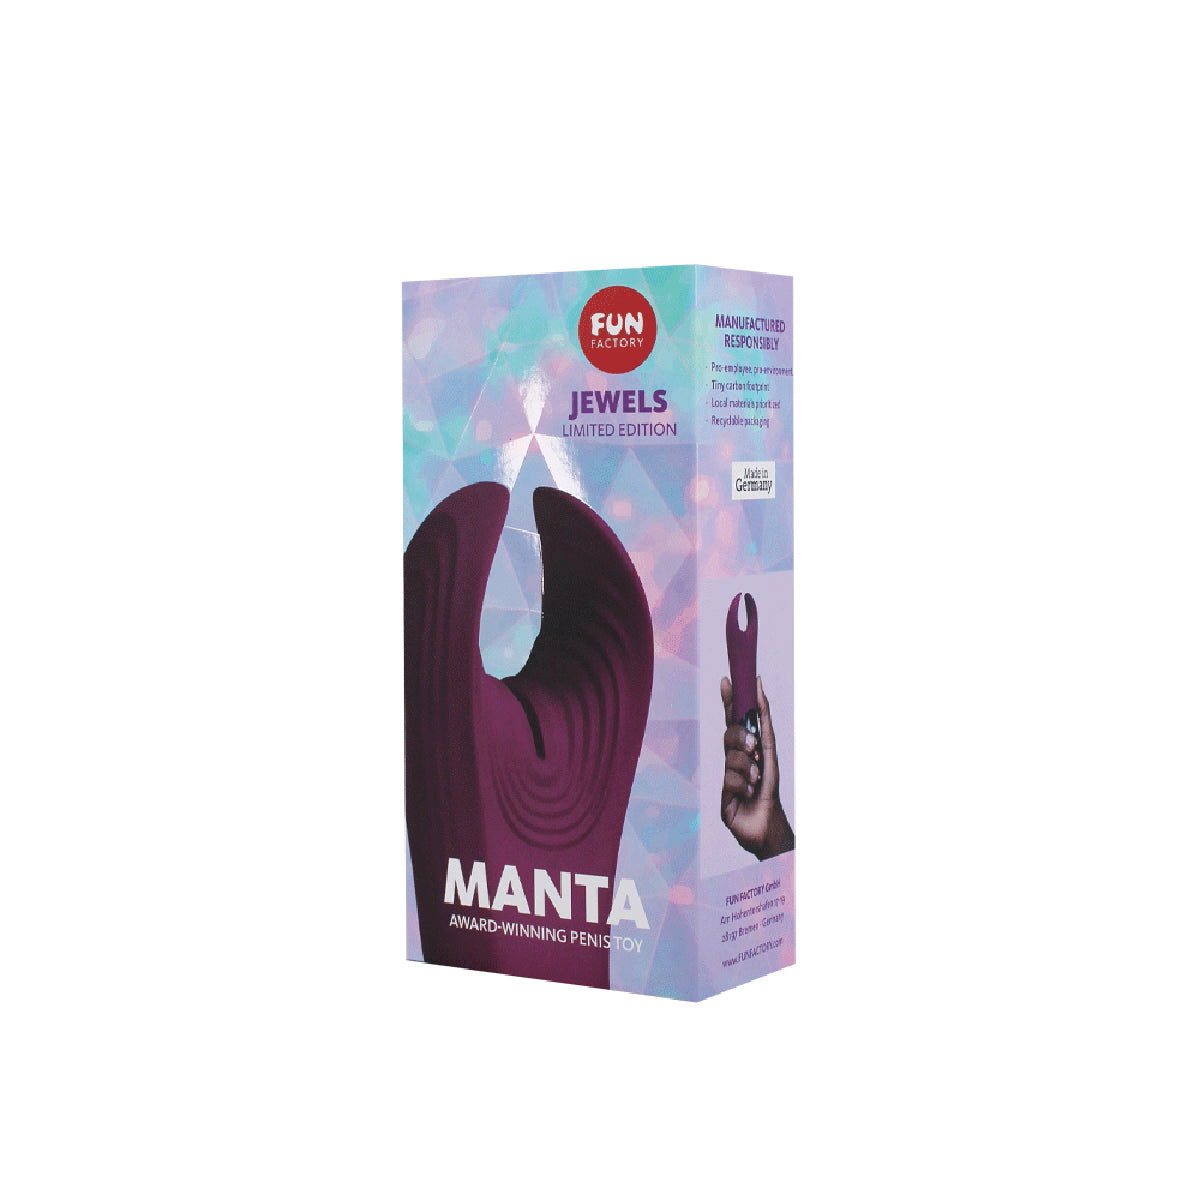 Fun Factory Manta - Garnet Intimates Adult Boutique